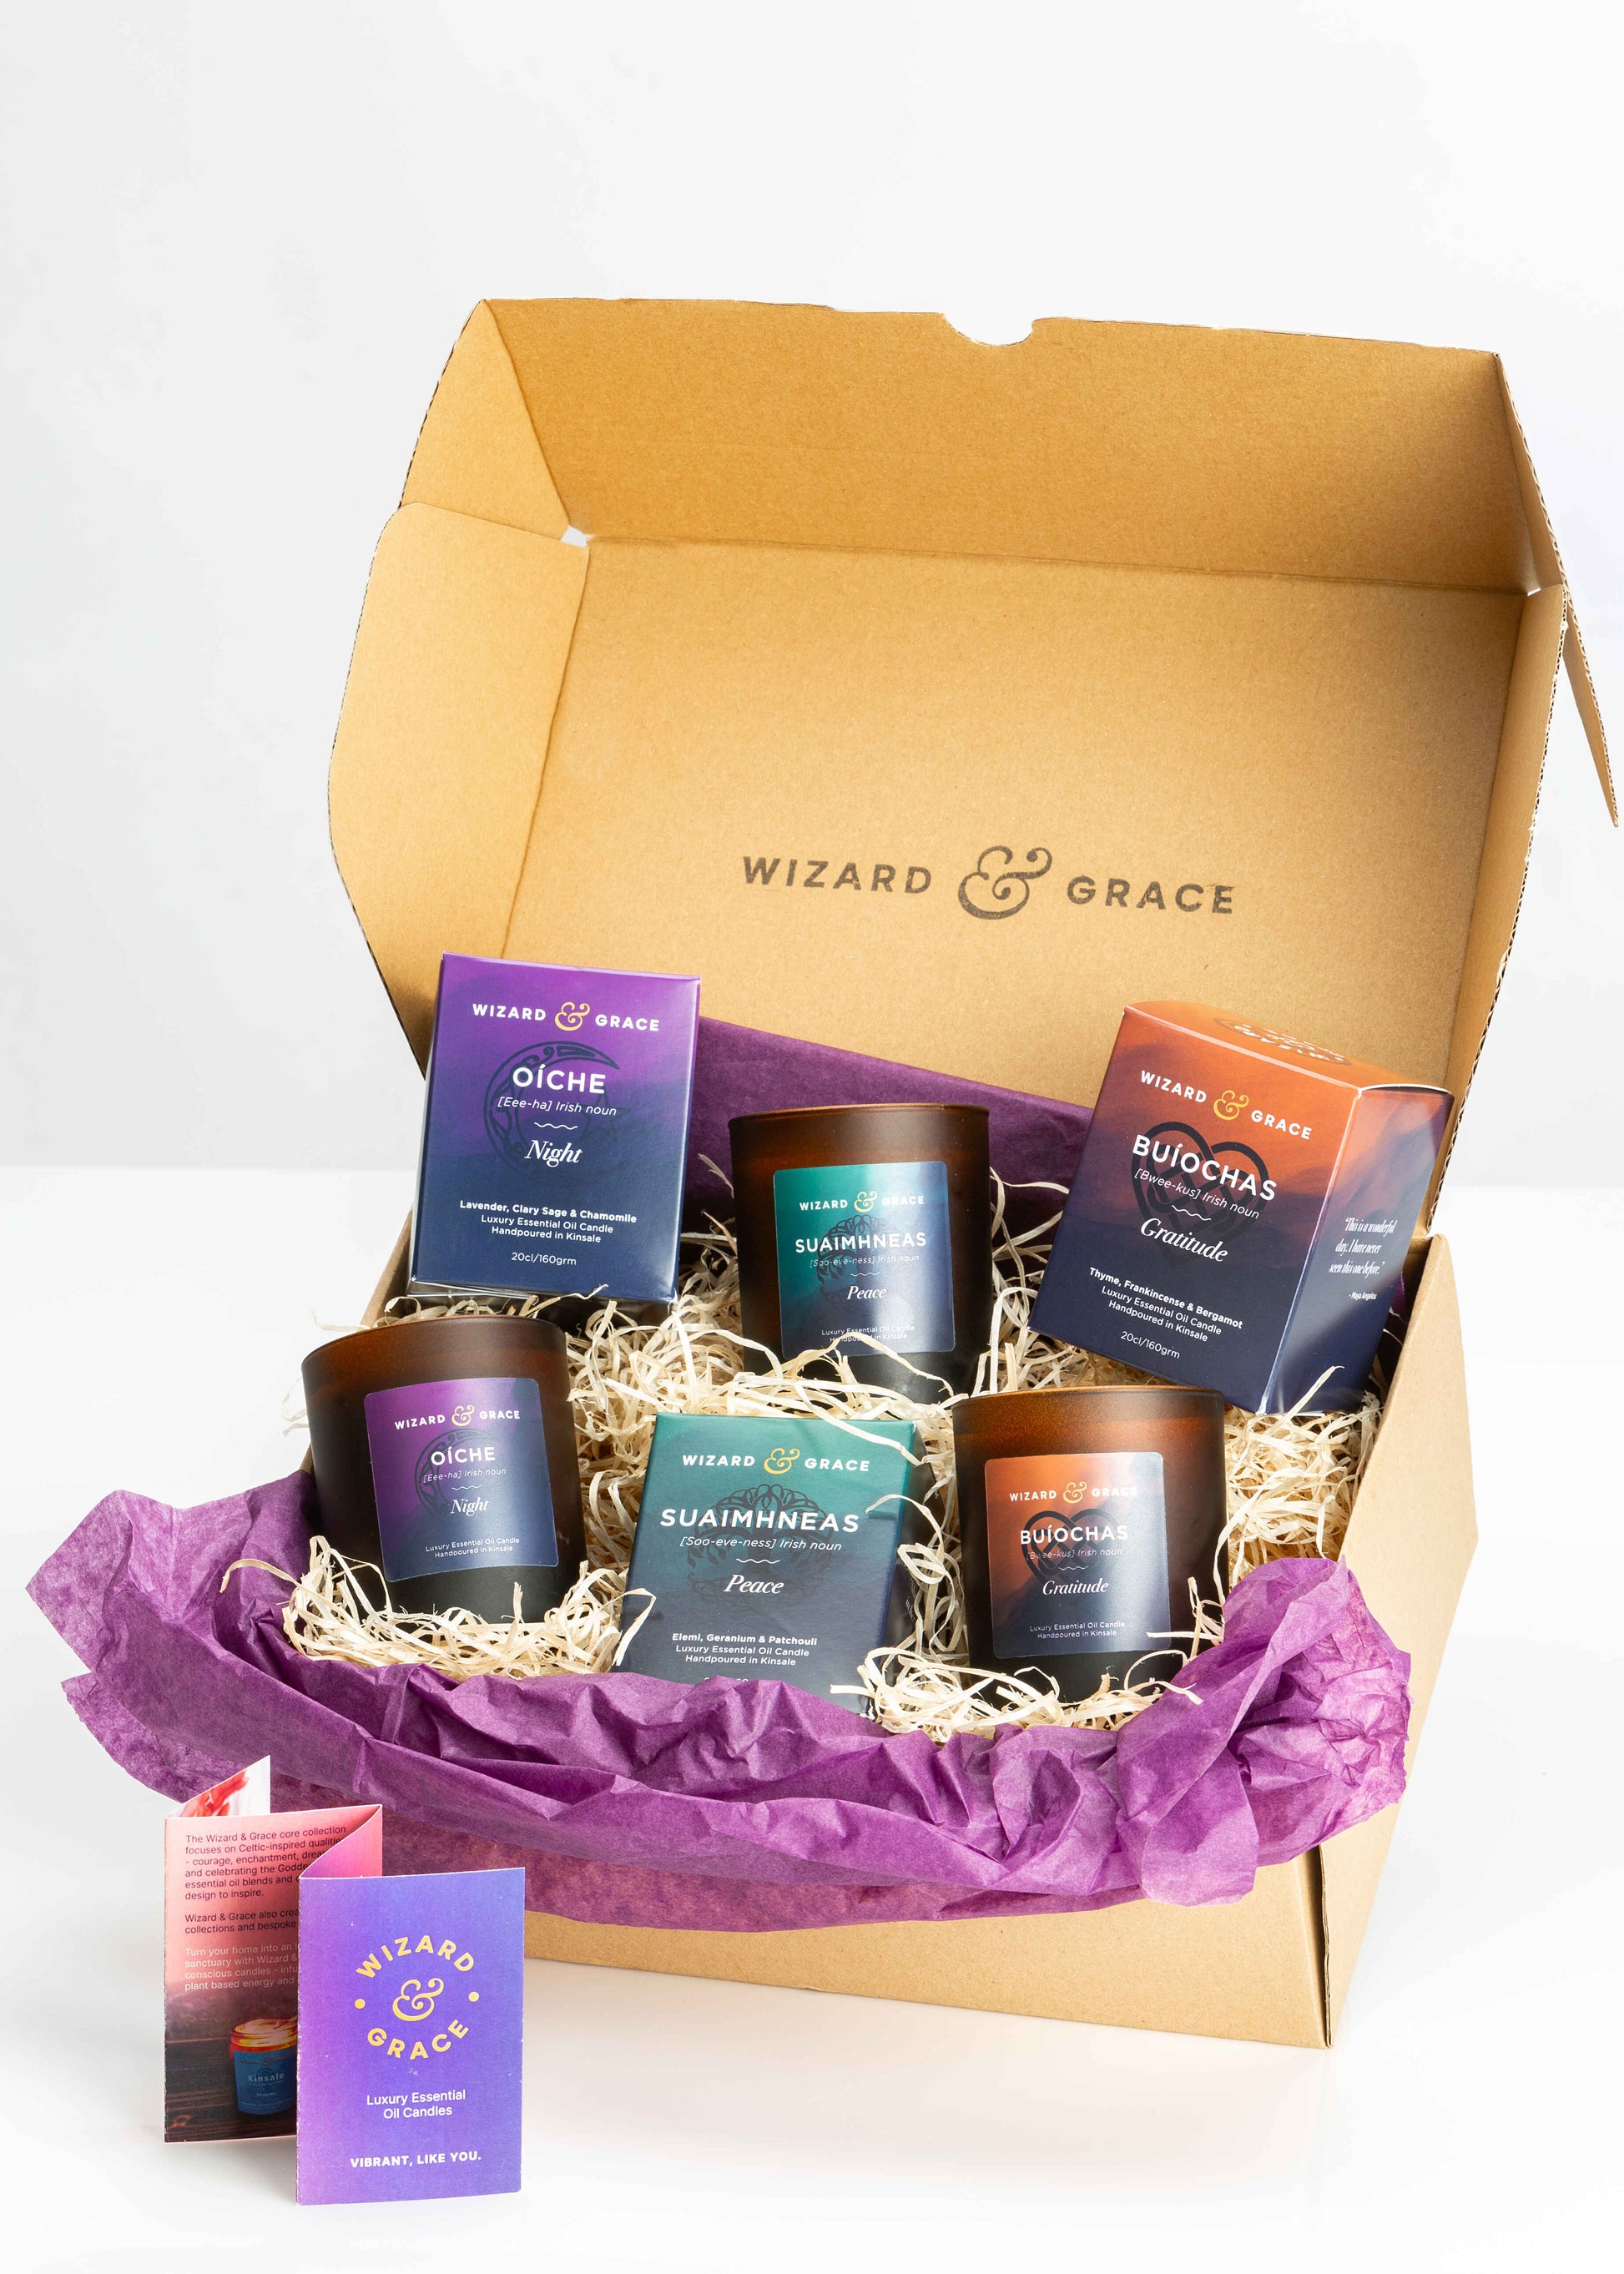 Wizard & Grace Wellbeing Gift Card - Wizard & Grace